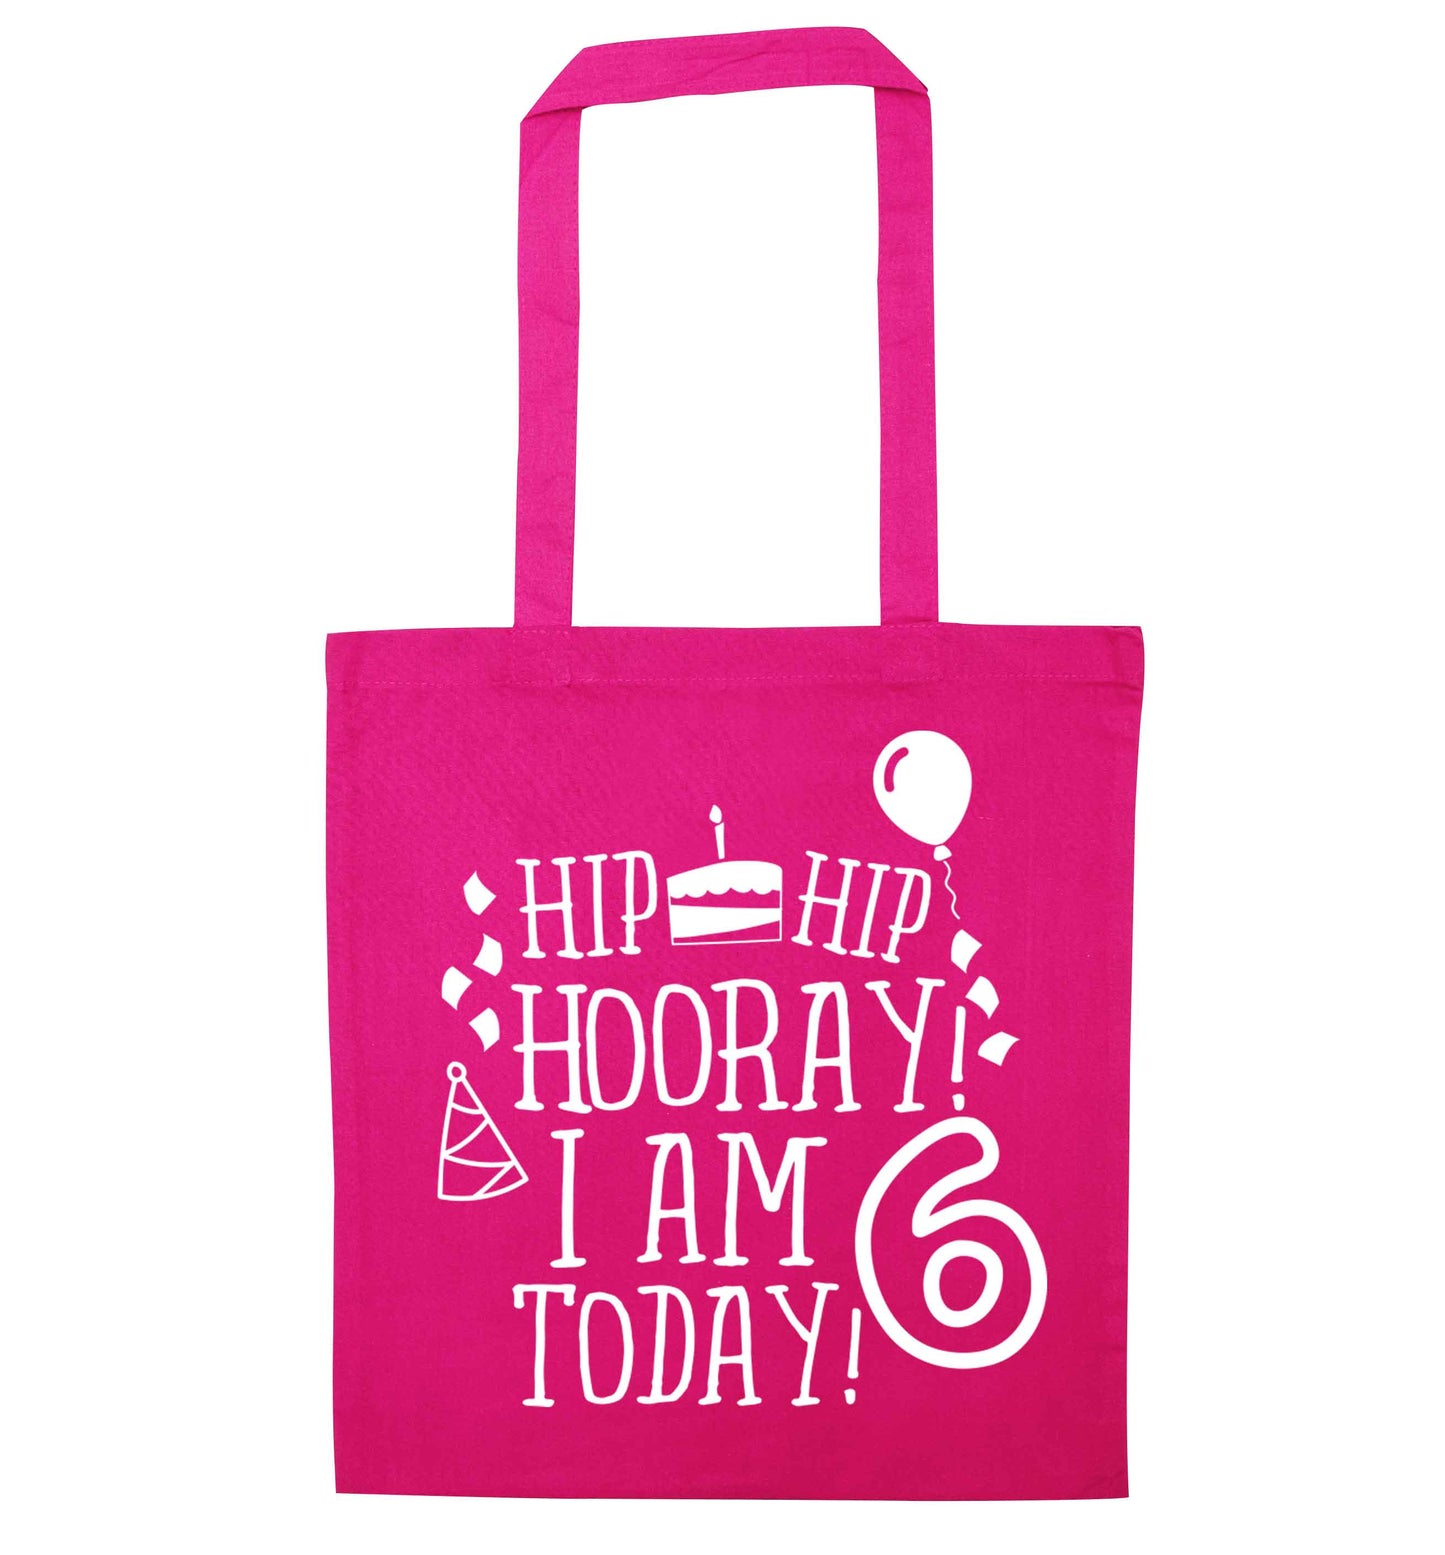 Hip hip hooray I am six today! pink tote bag